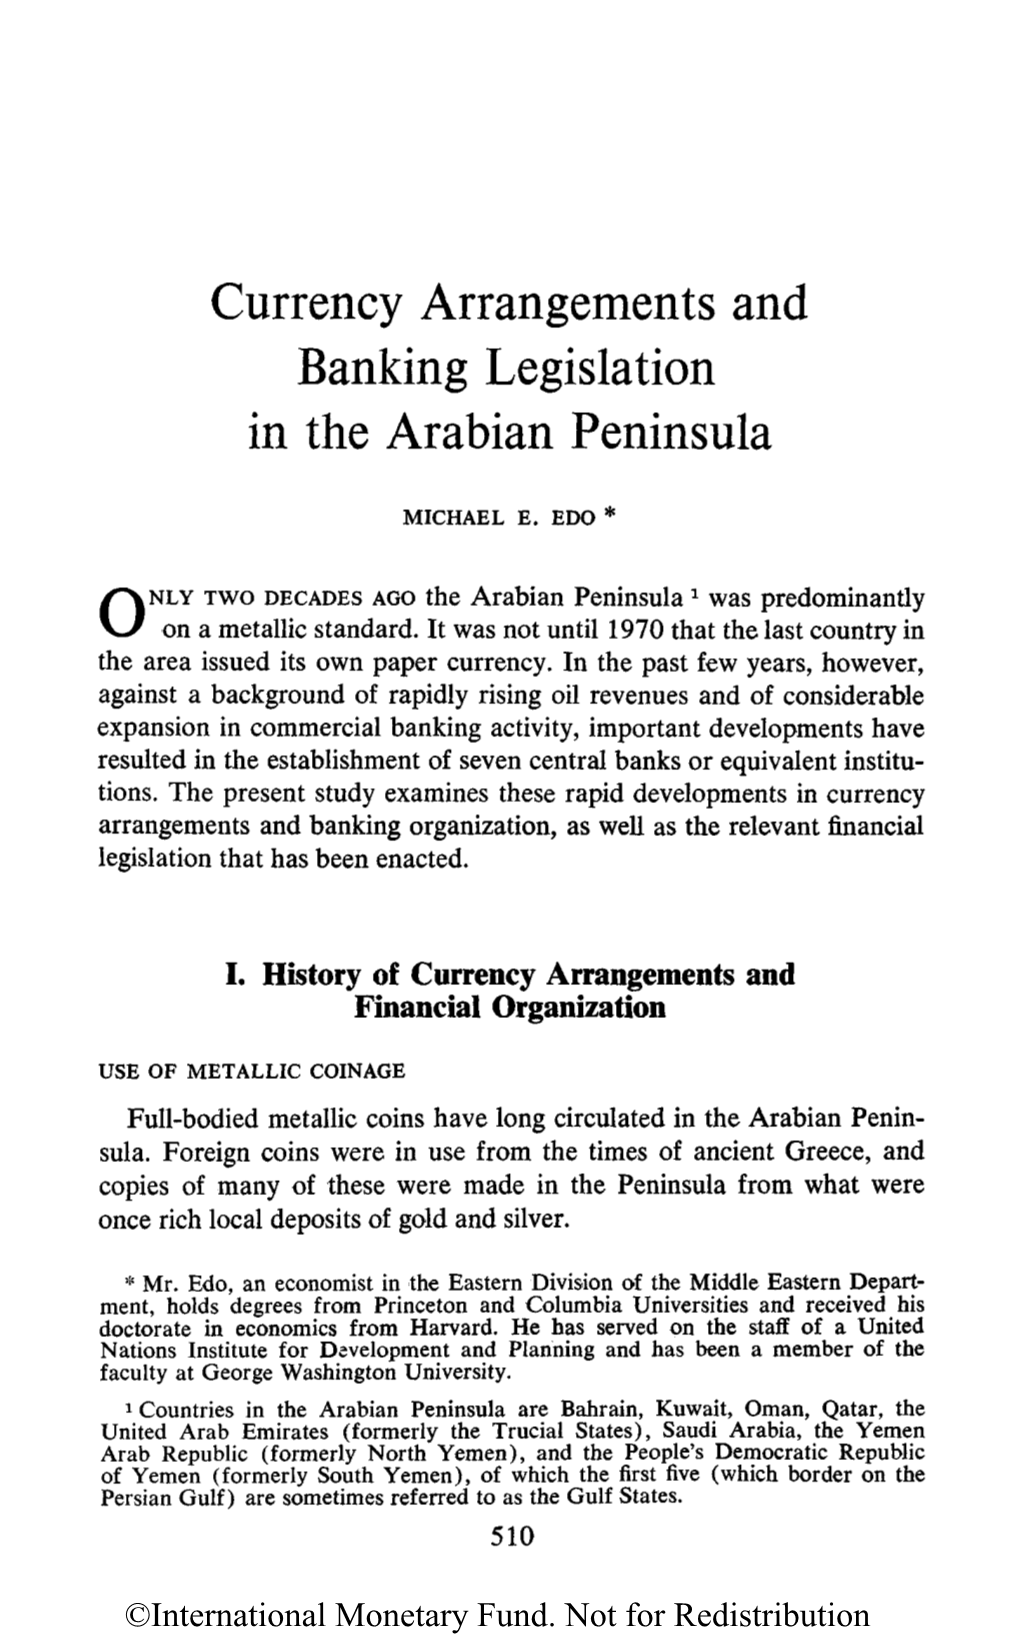 Currency Arrangements and Banking Legislation in the Arabian Peninsula